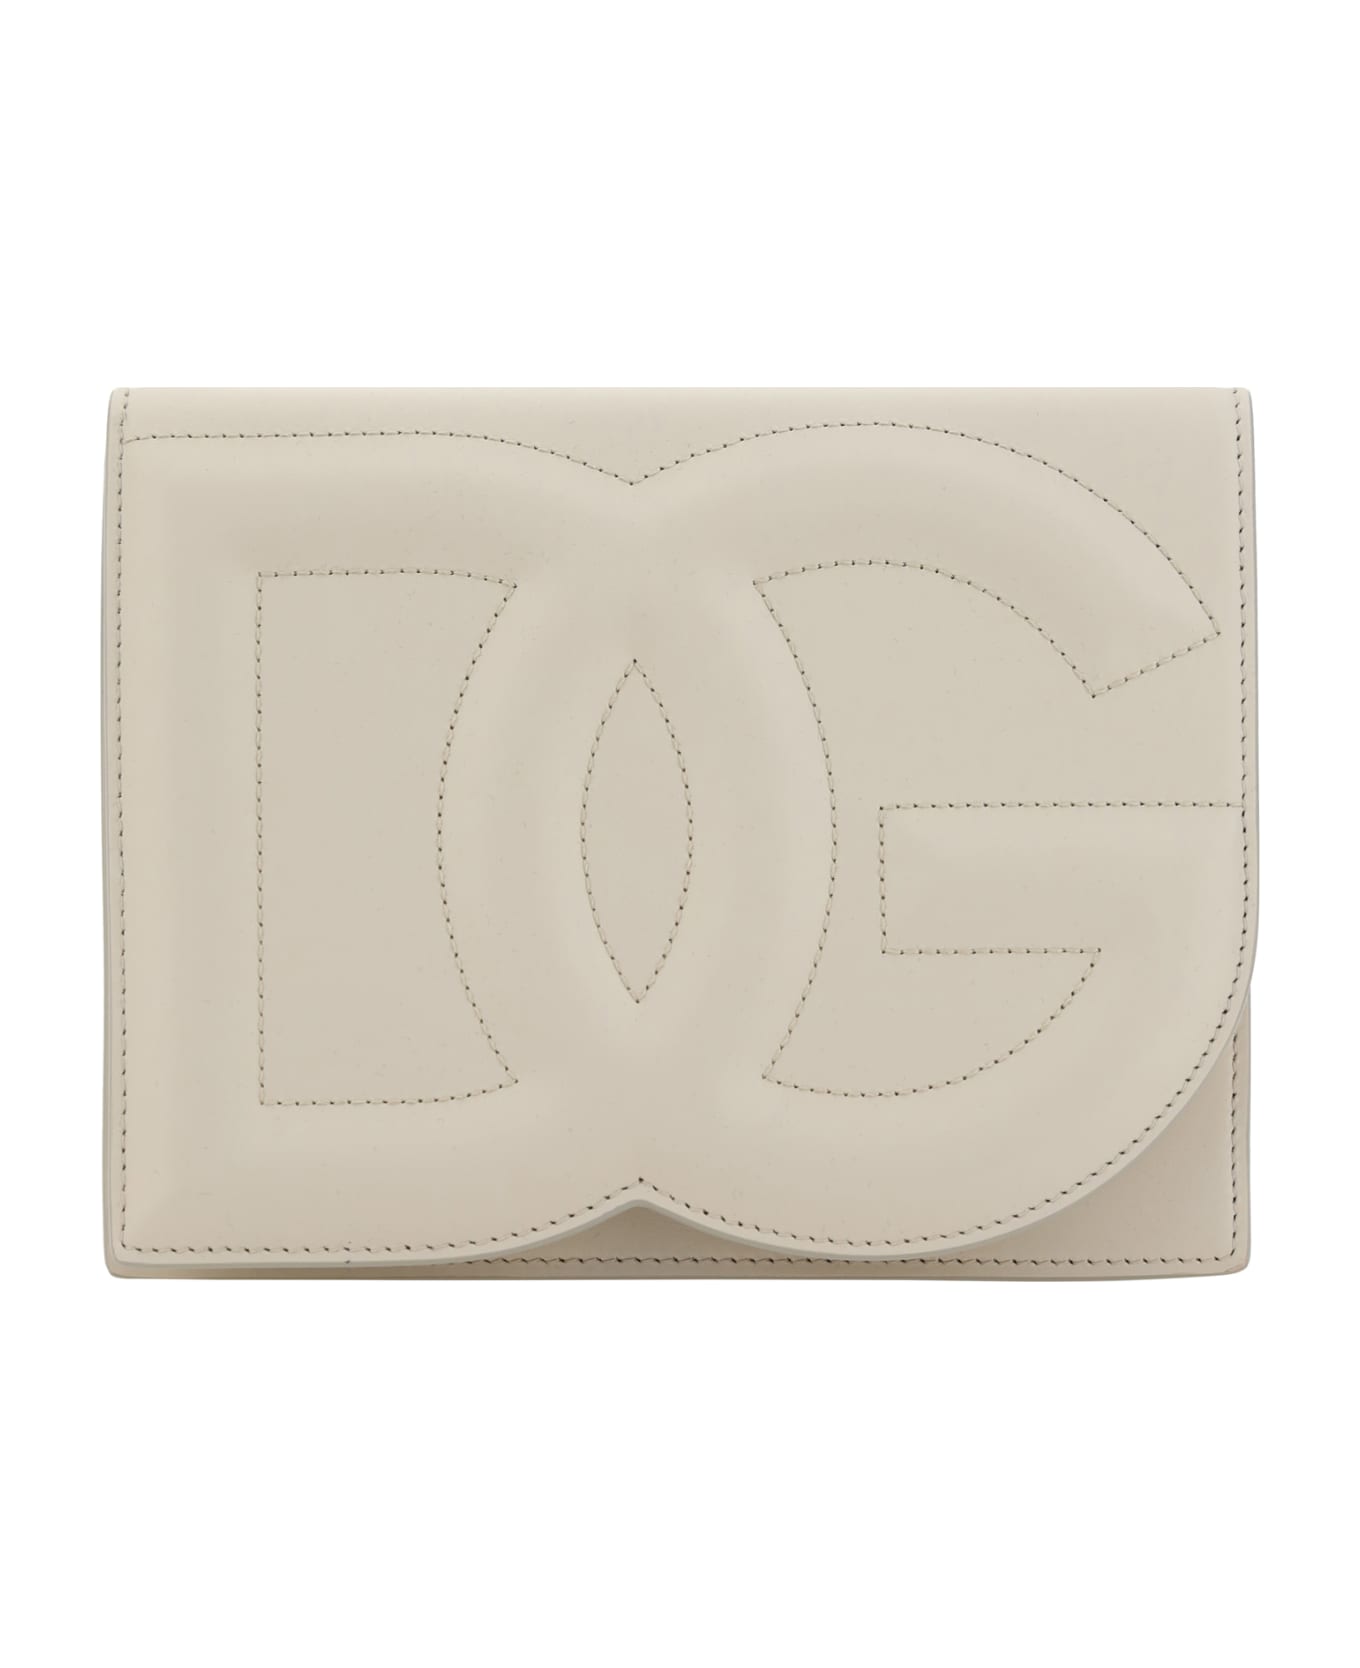 Dolce & Gabbana Shoulder Bag - NEUTRALS